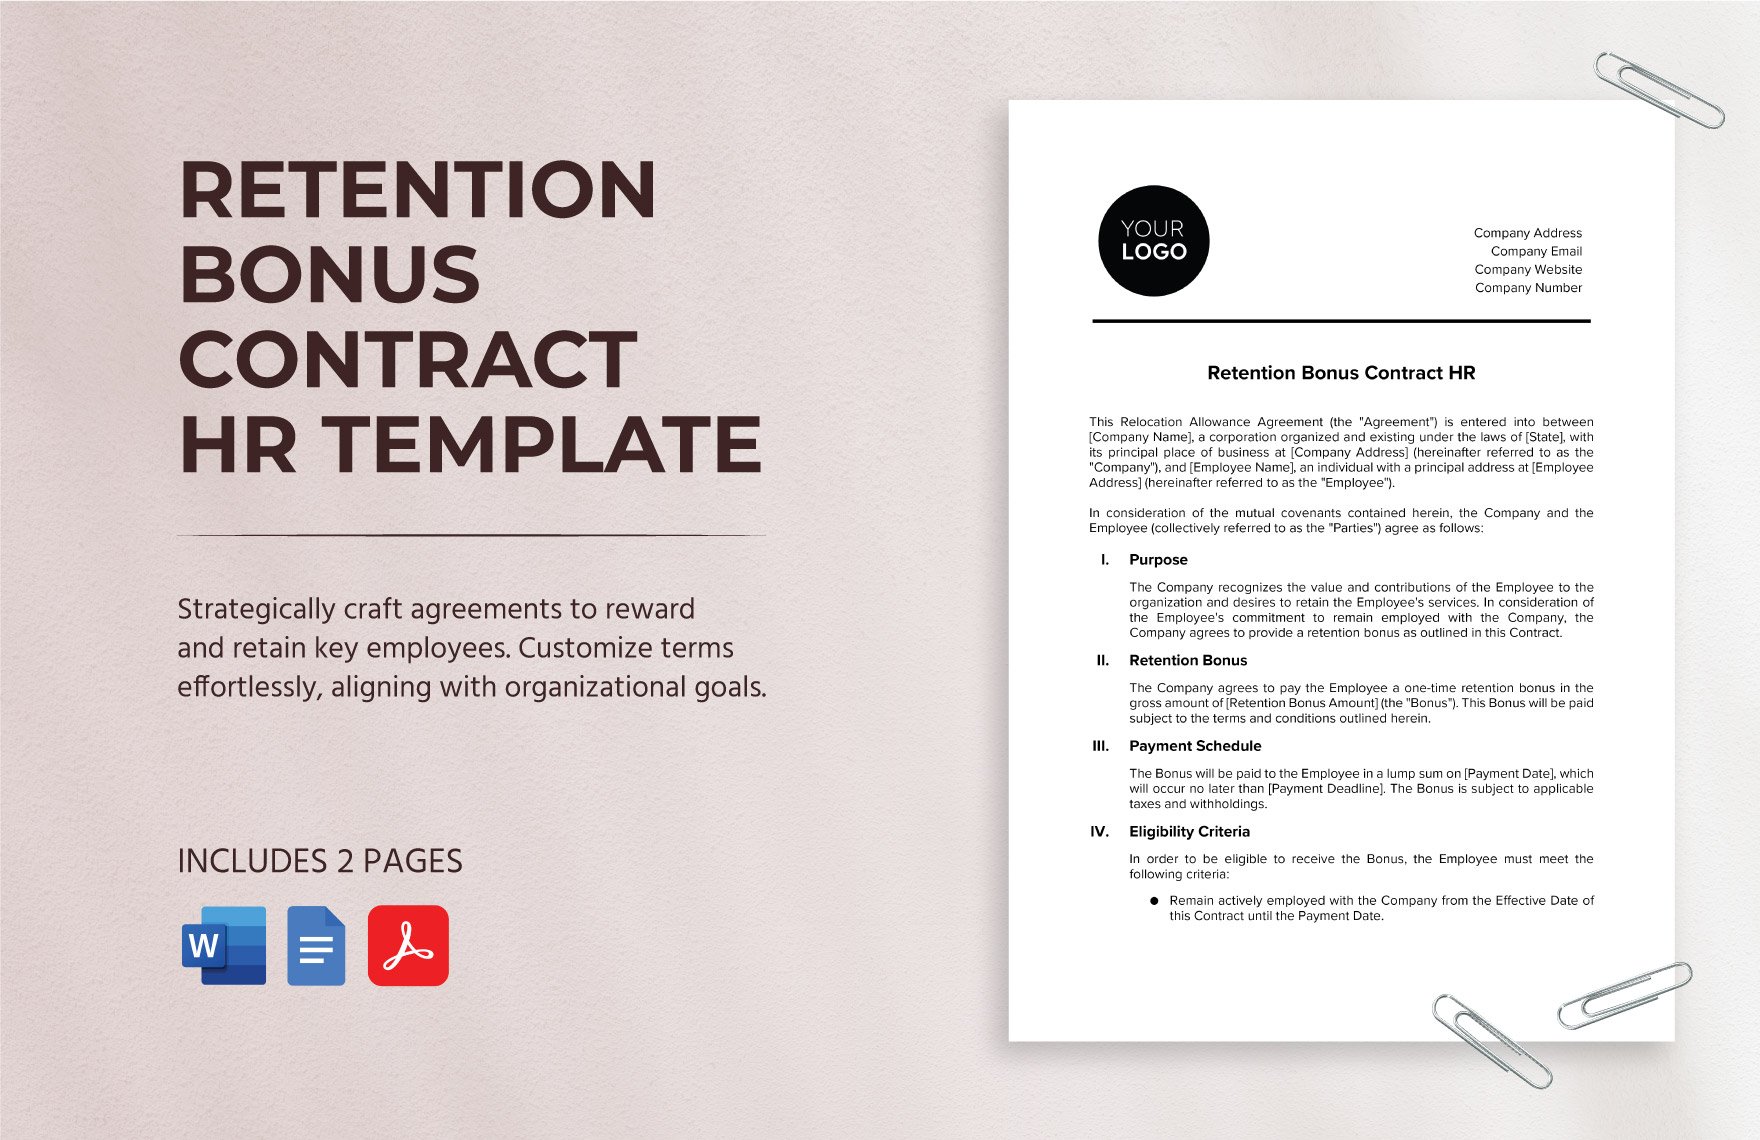 Retention Bonus Contract HR Template